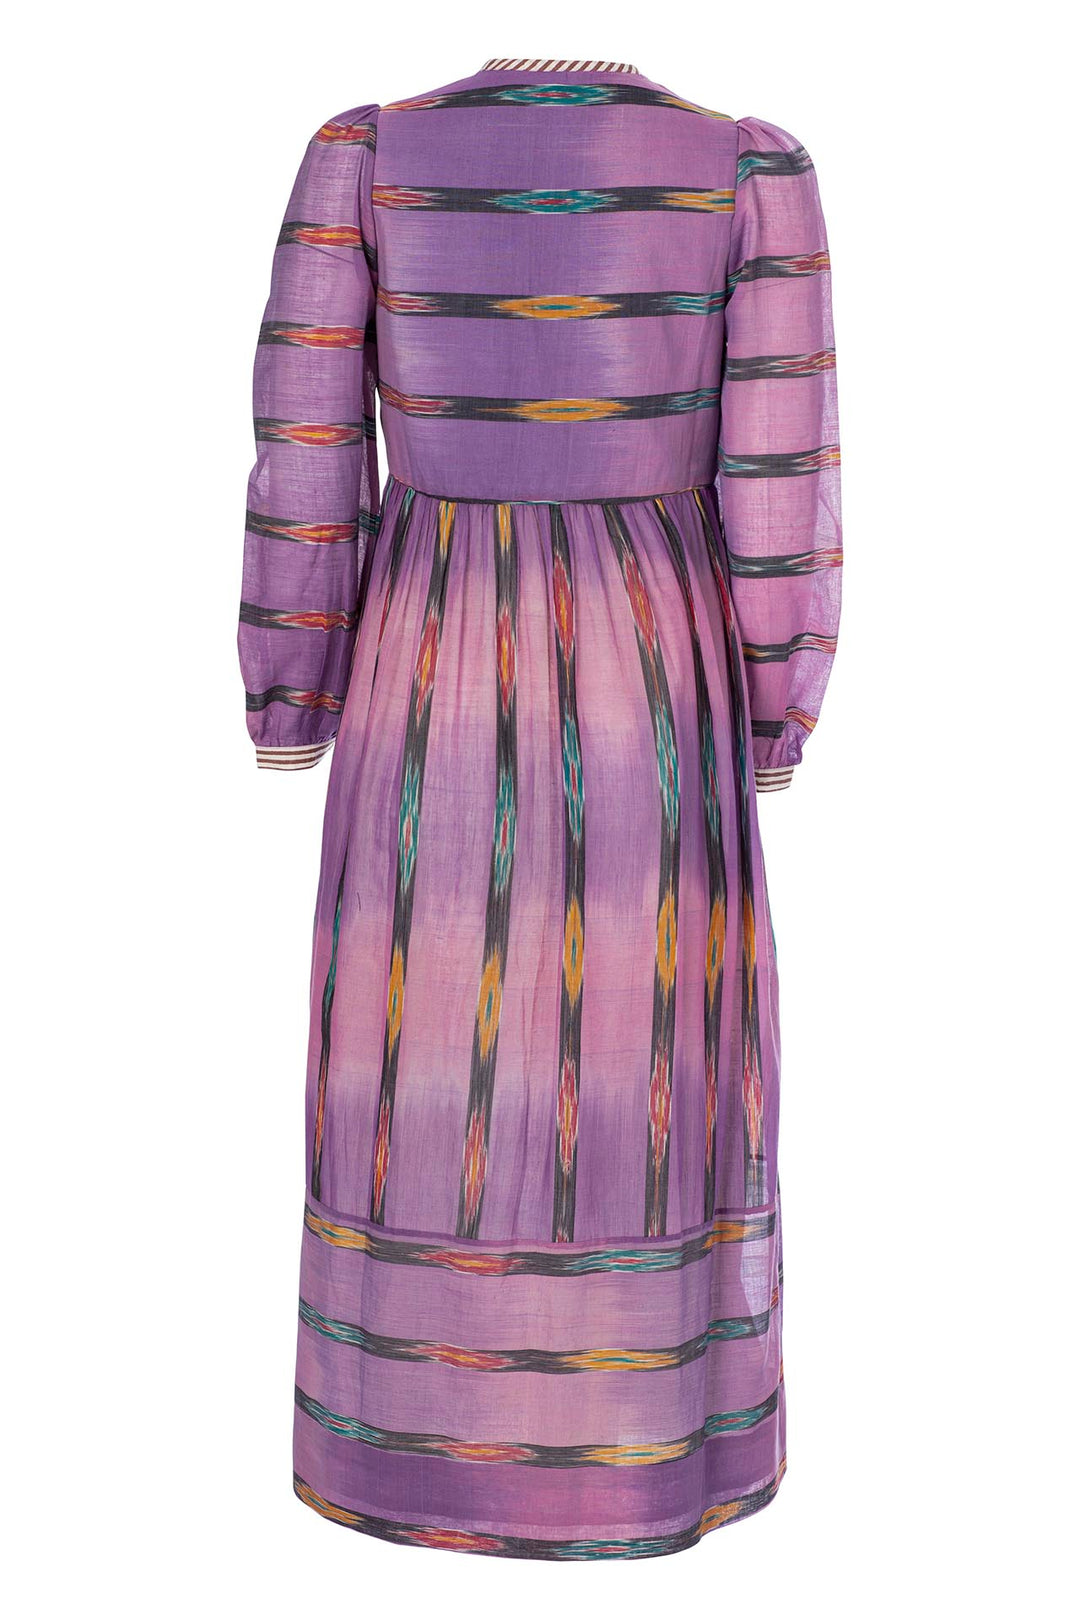 Winifred Violet Night Dress